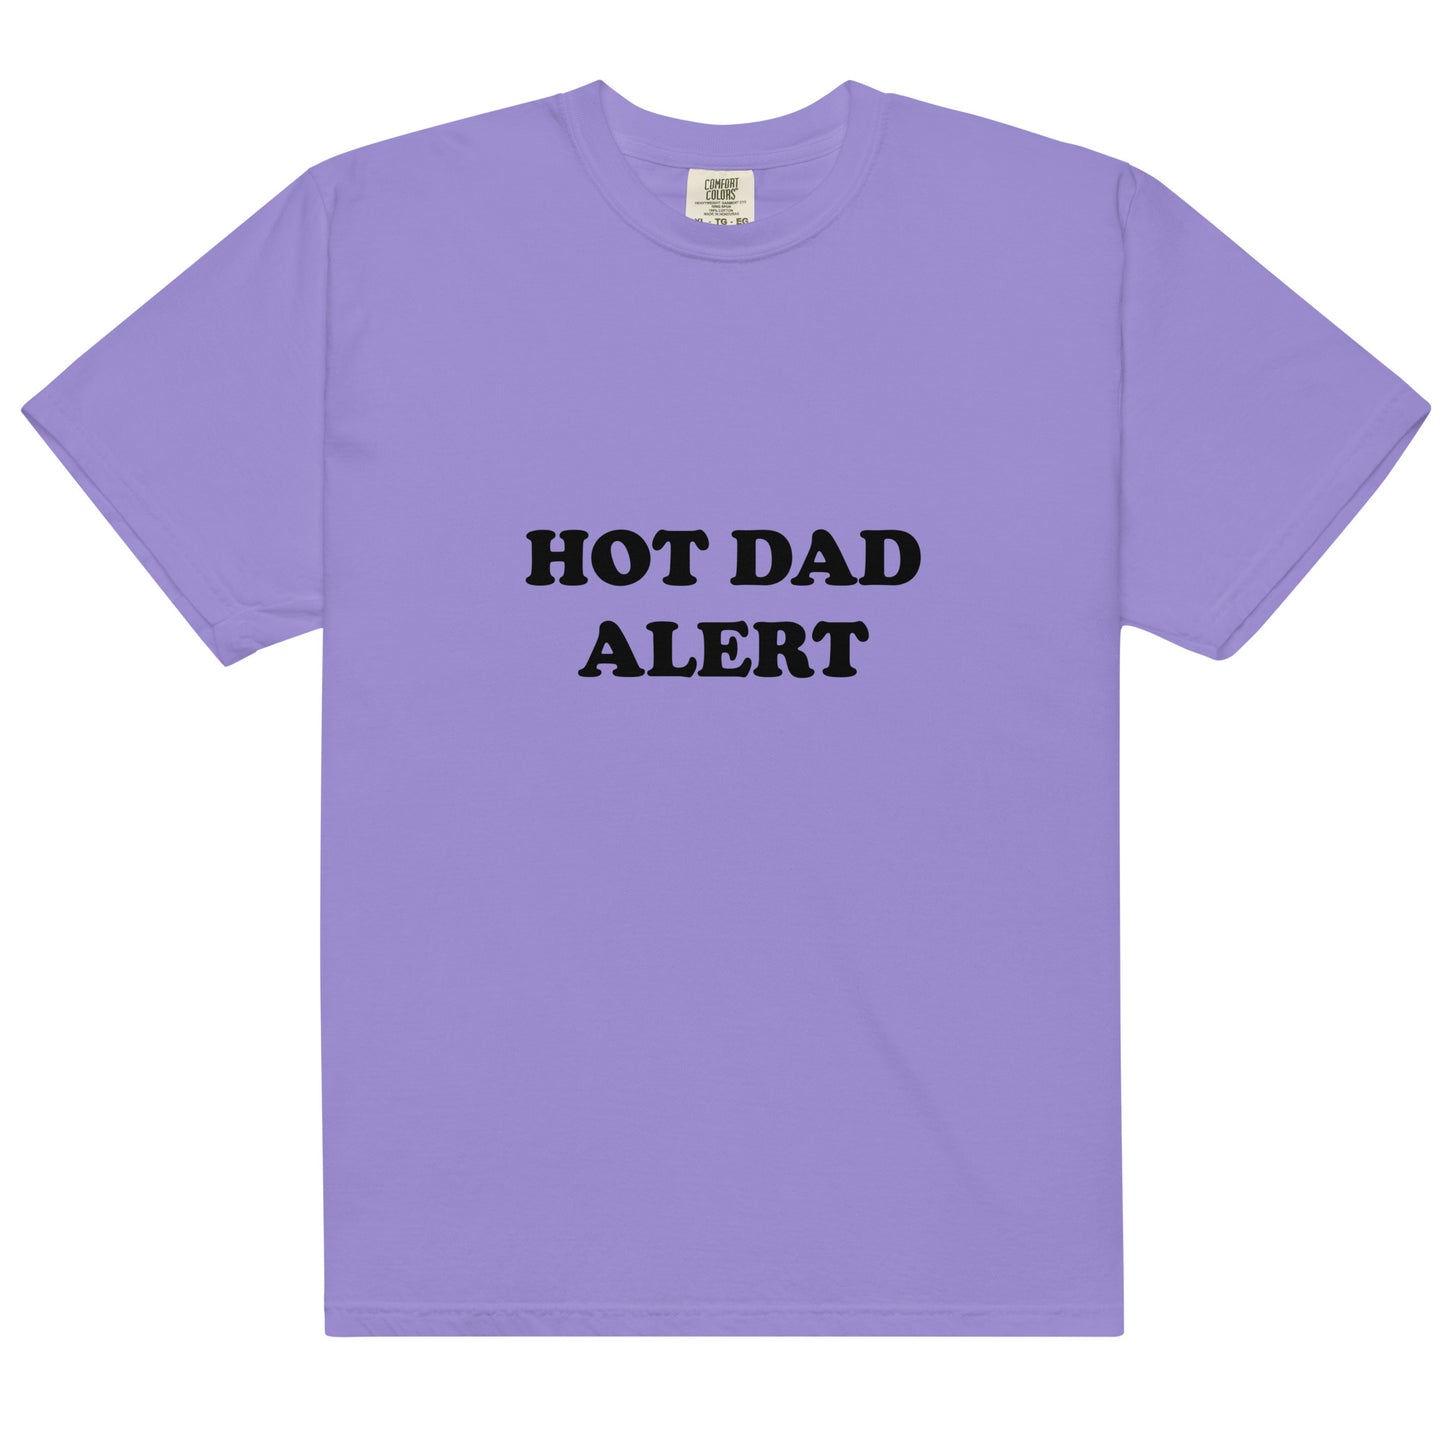 Hot Dad Alert Printed Tshirt